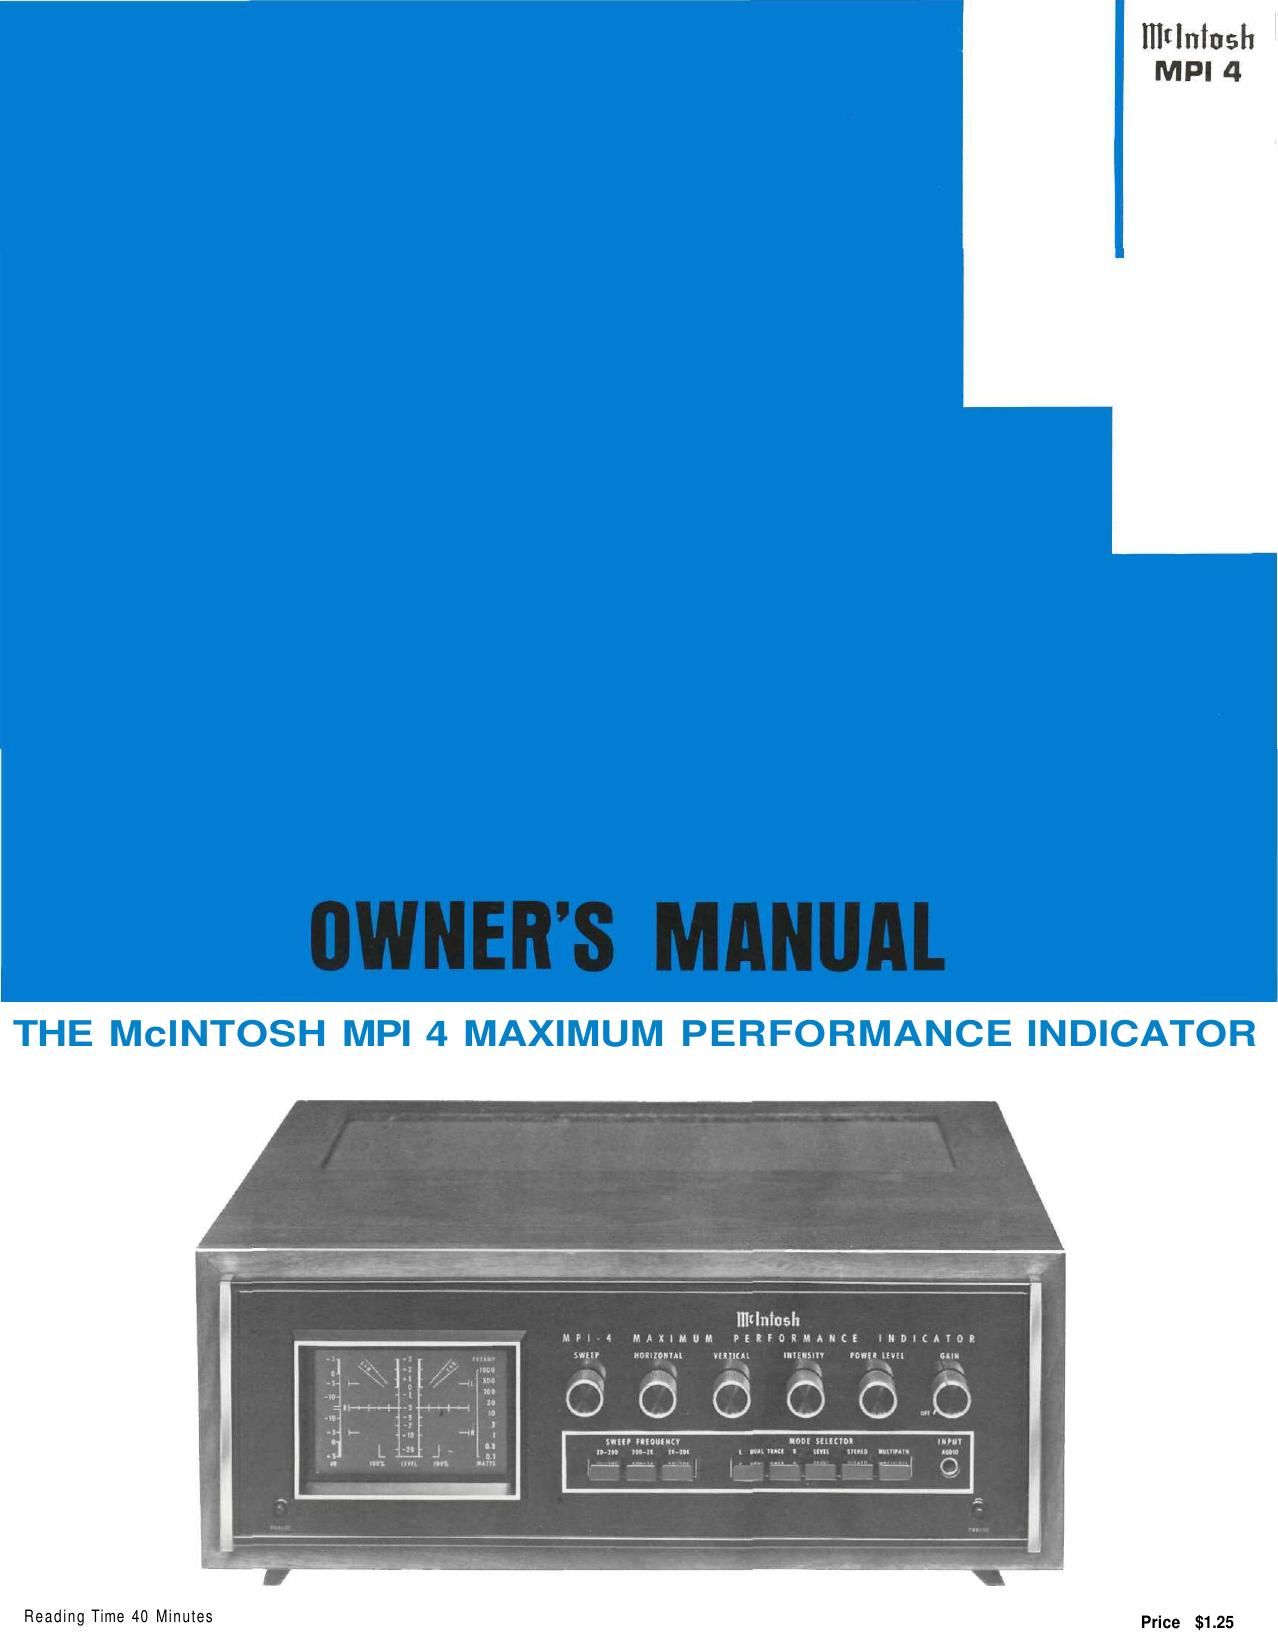 McIntosh MPI 4 Owners Manual